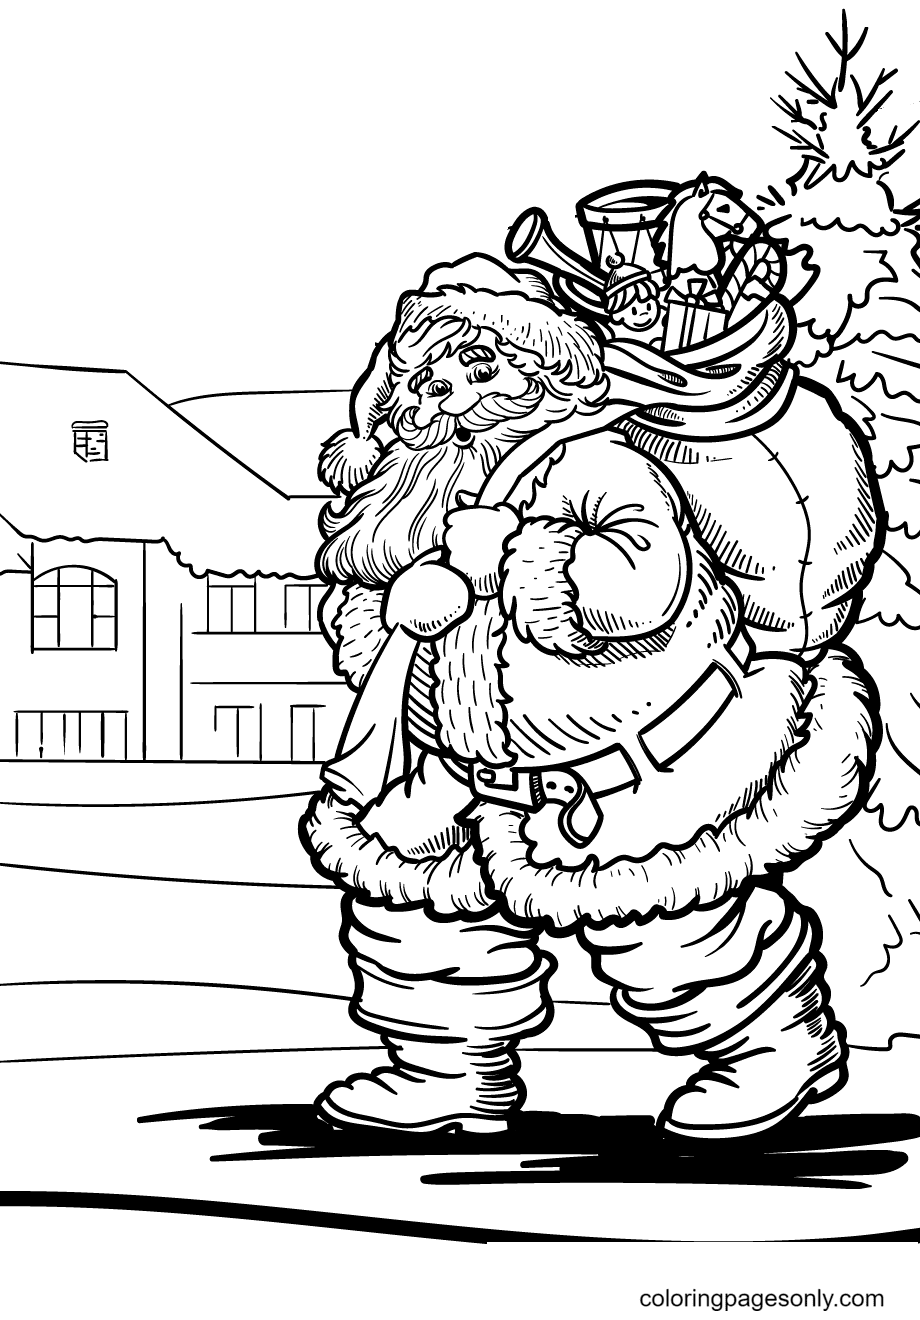 Santa Claus With a Magic Gift Bag Coloring Page